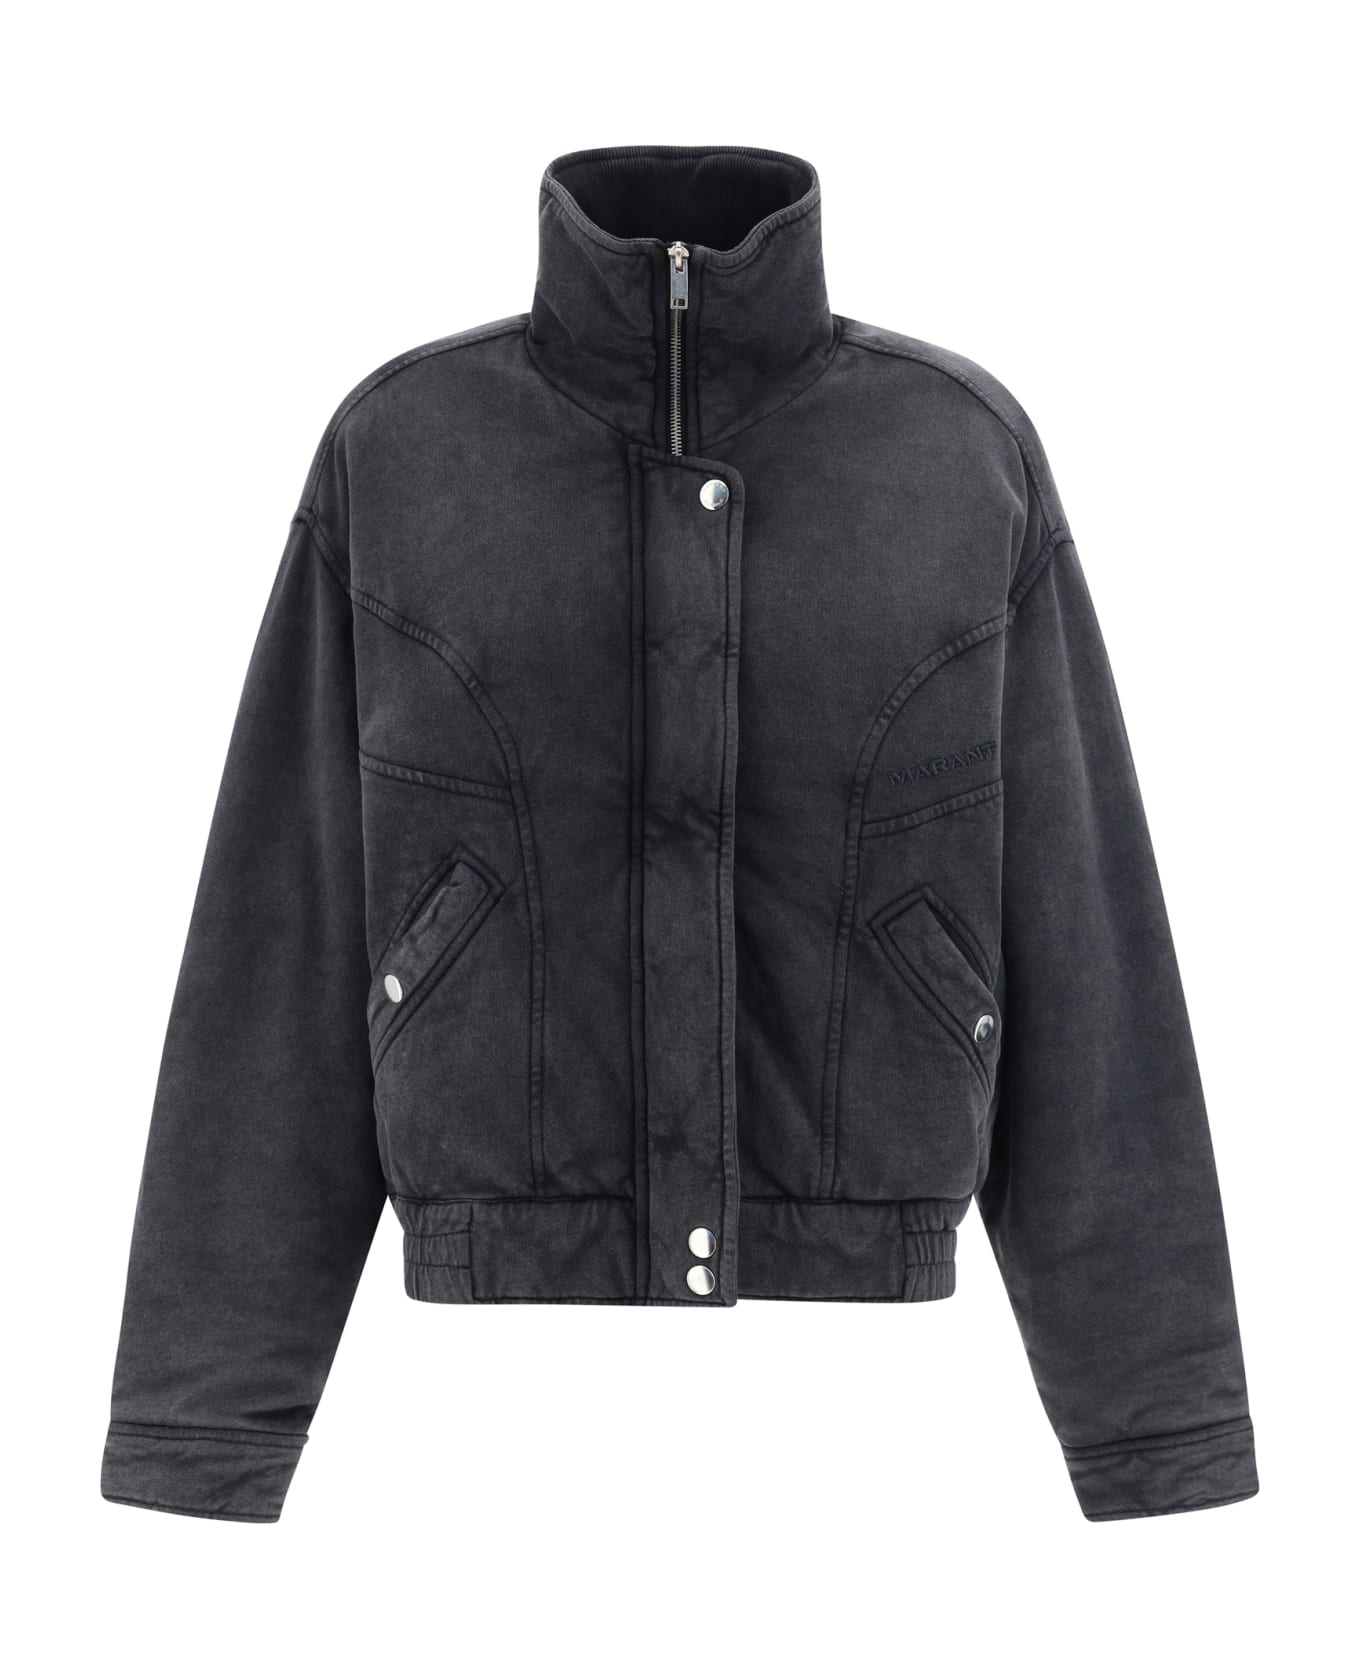 Marant Étoile Parveti Fleece Jacket - Faded Black